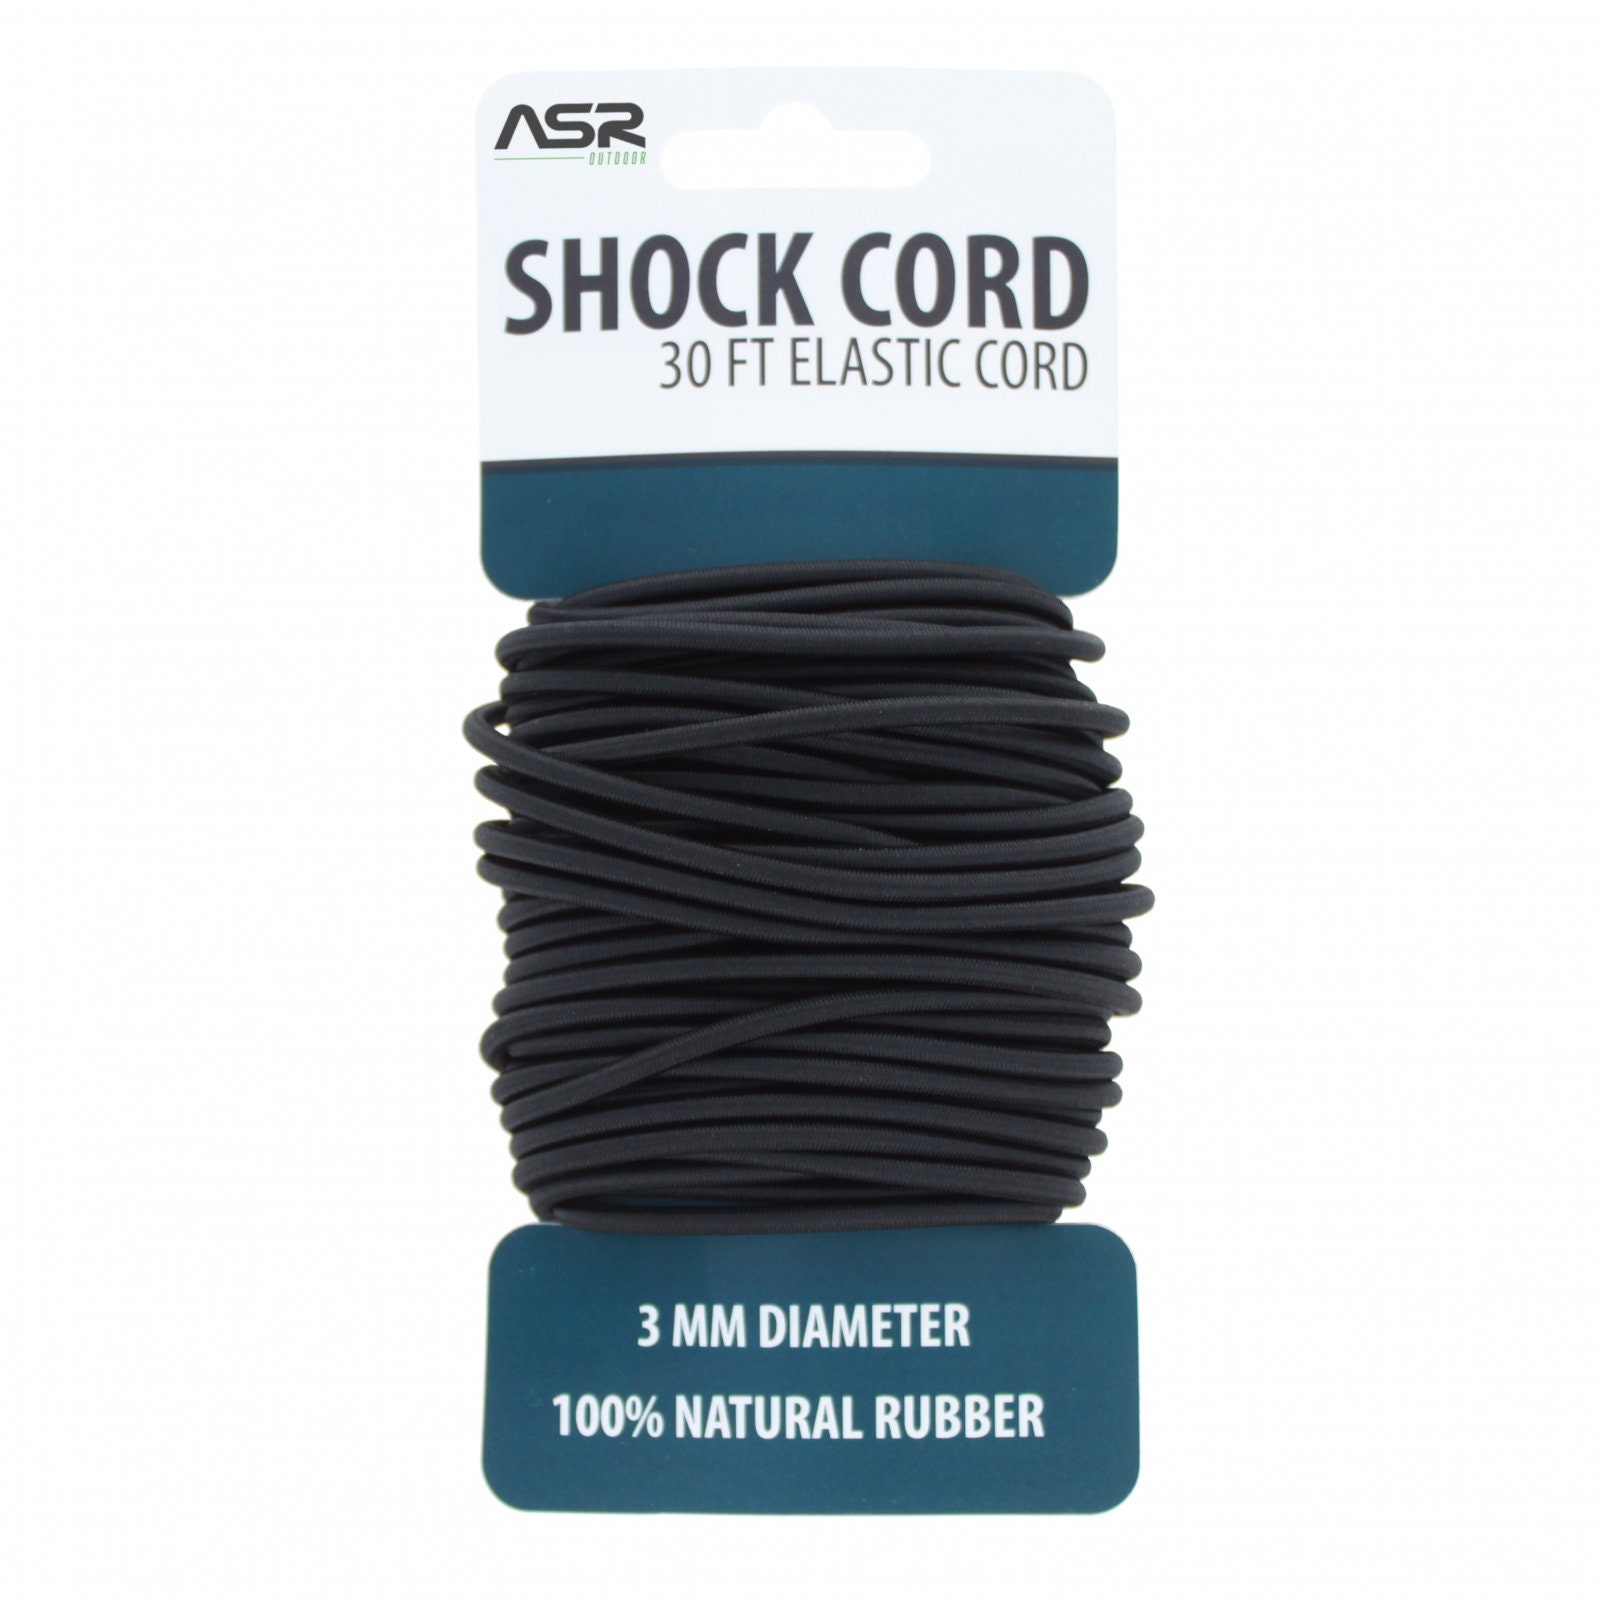 2MM Metallic Nylon Coated Round Elastic Cord Stretch Stretchable